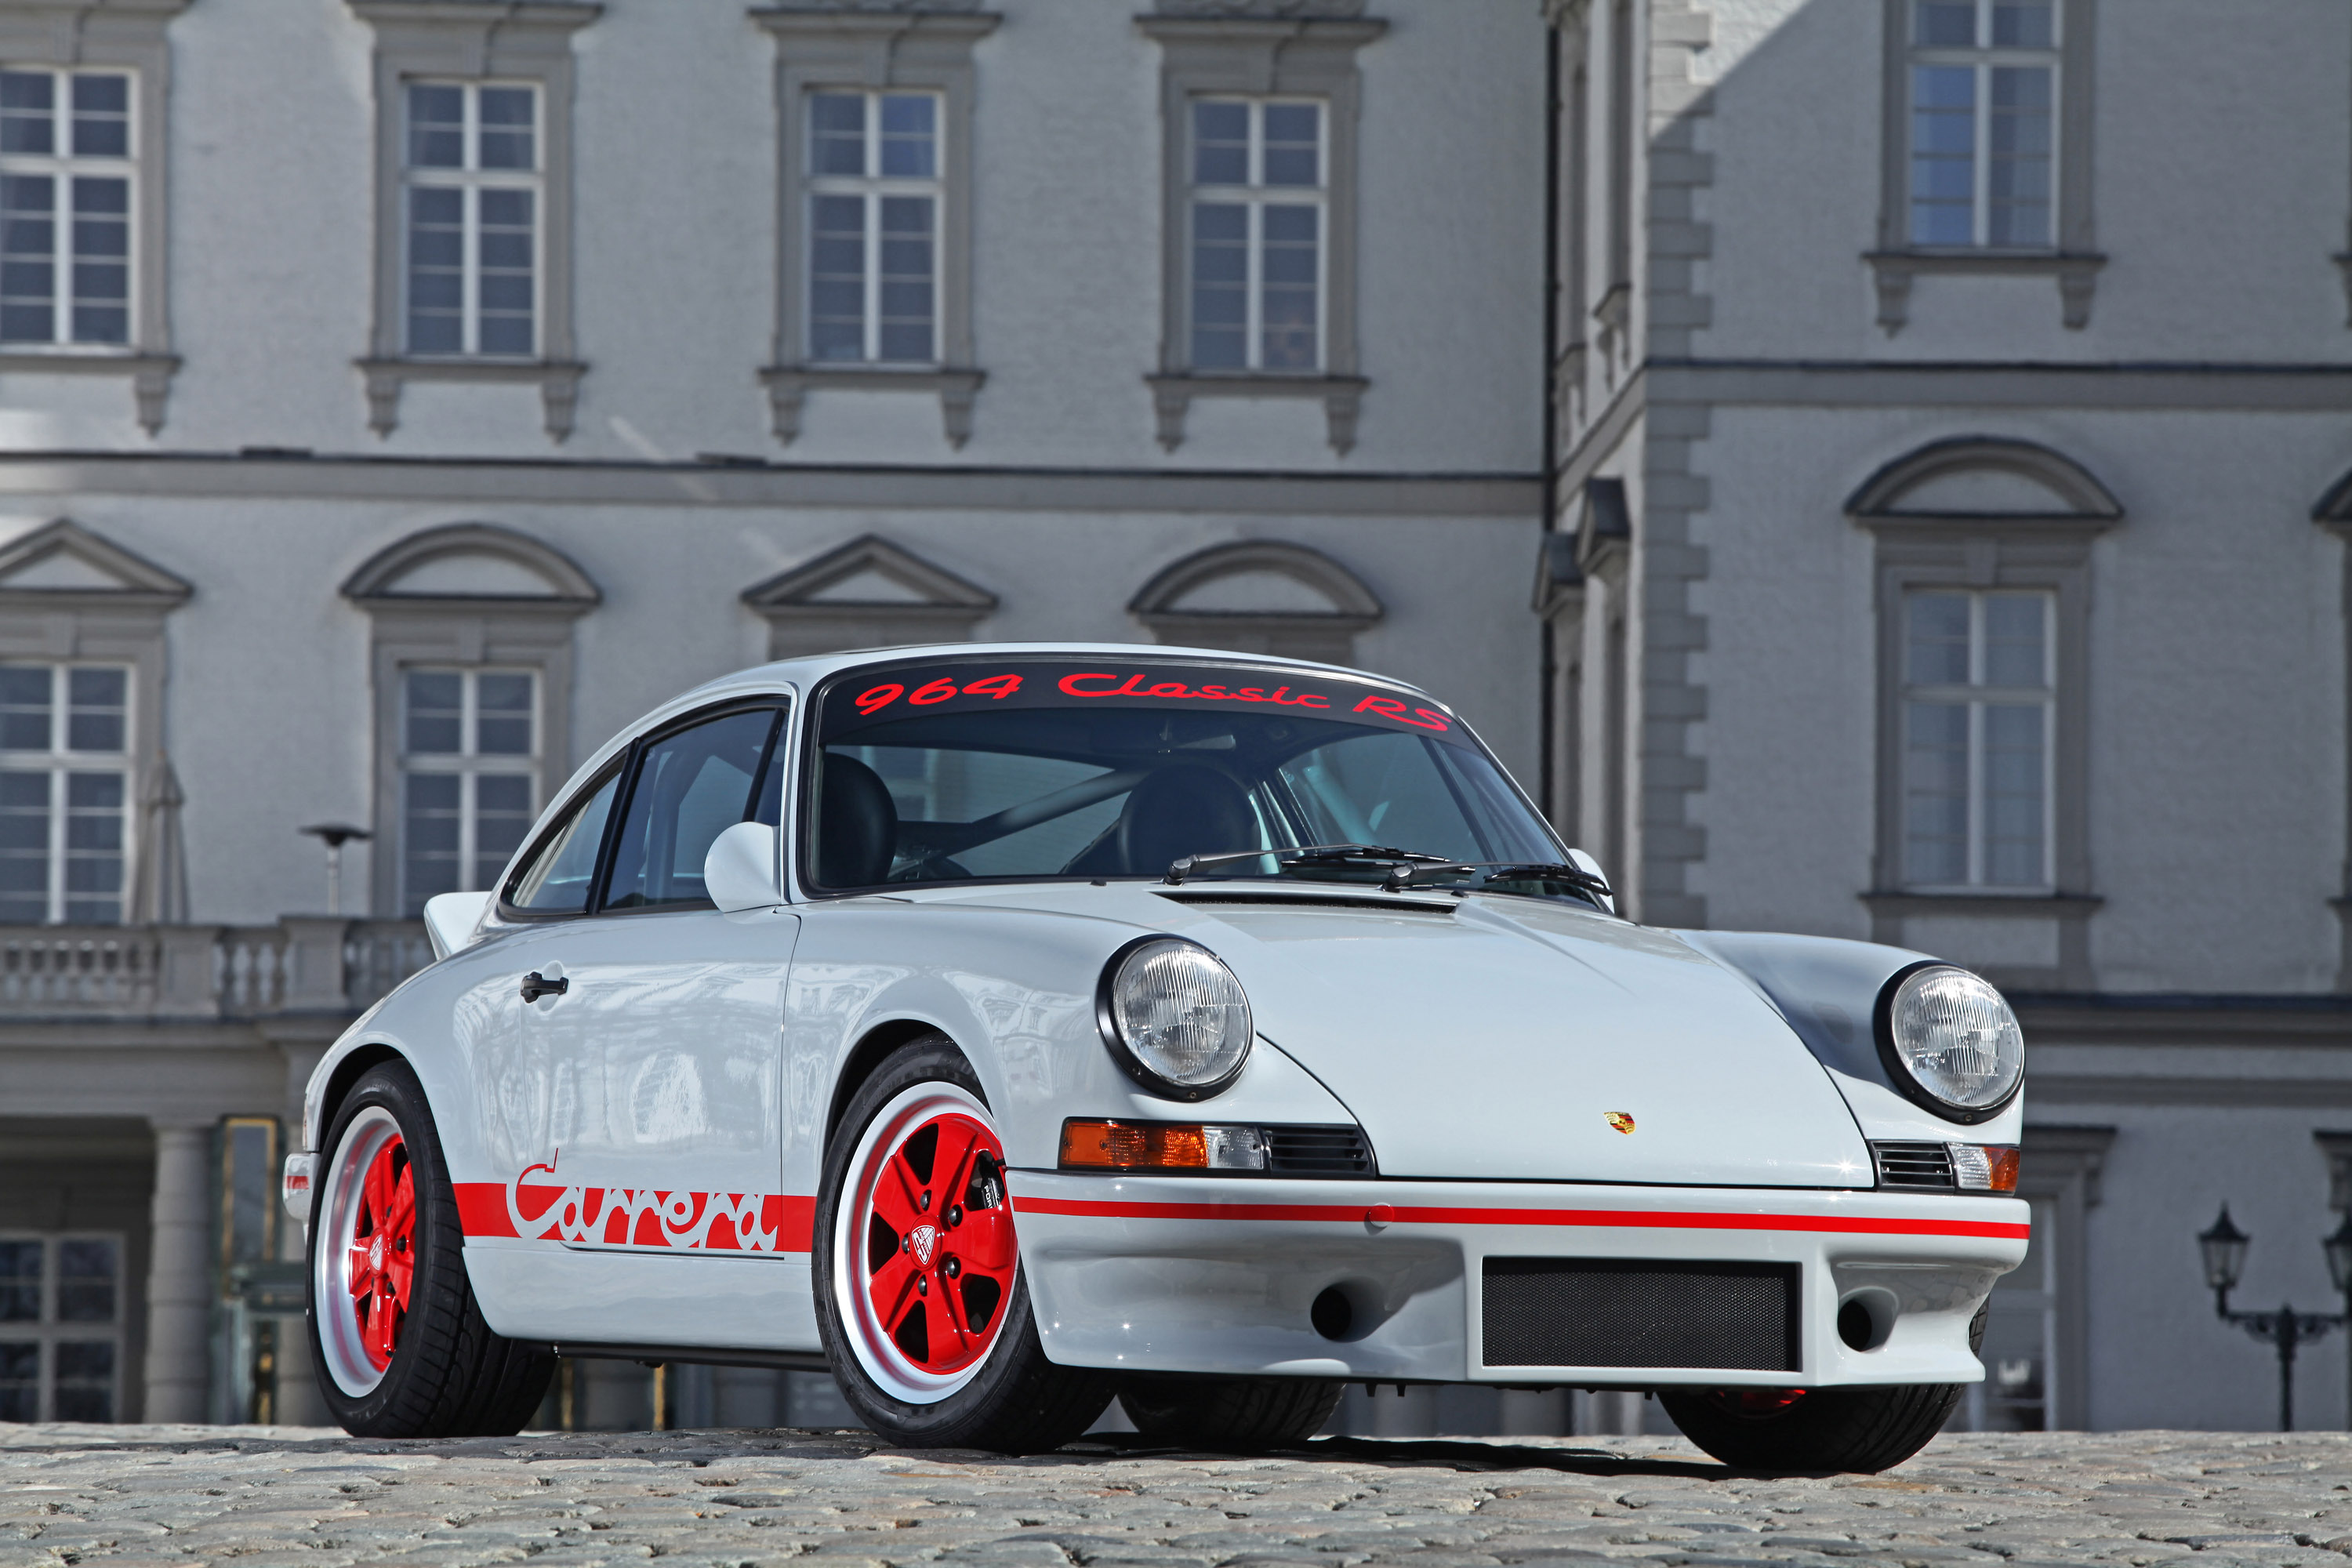 Завантажити шпалери Porsche 911 Carrera Rs на телефон безкоштовно